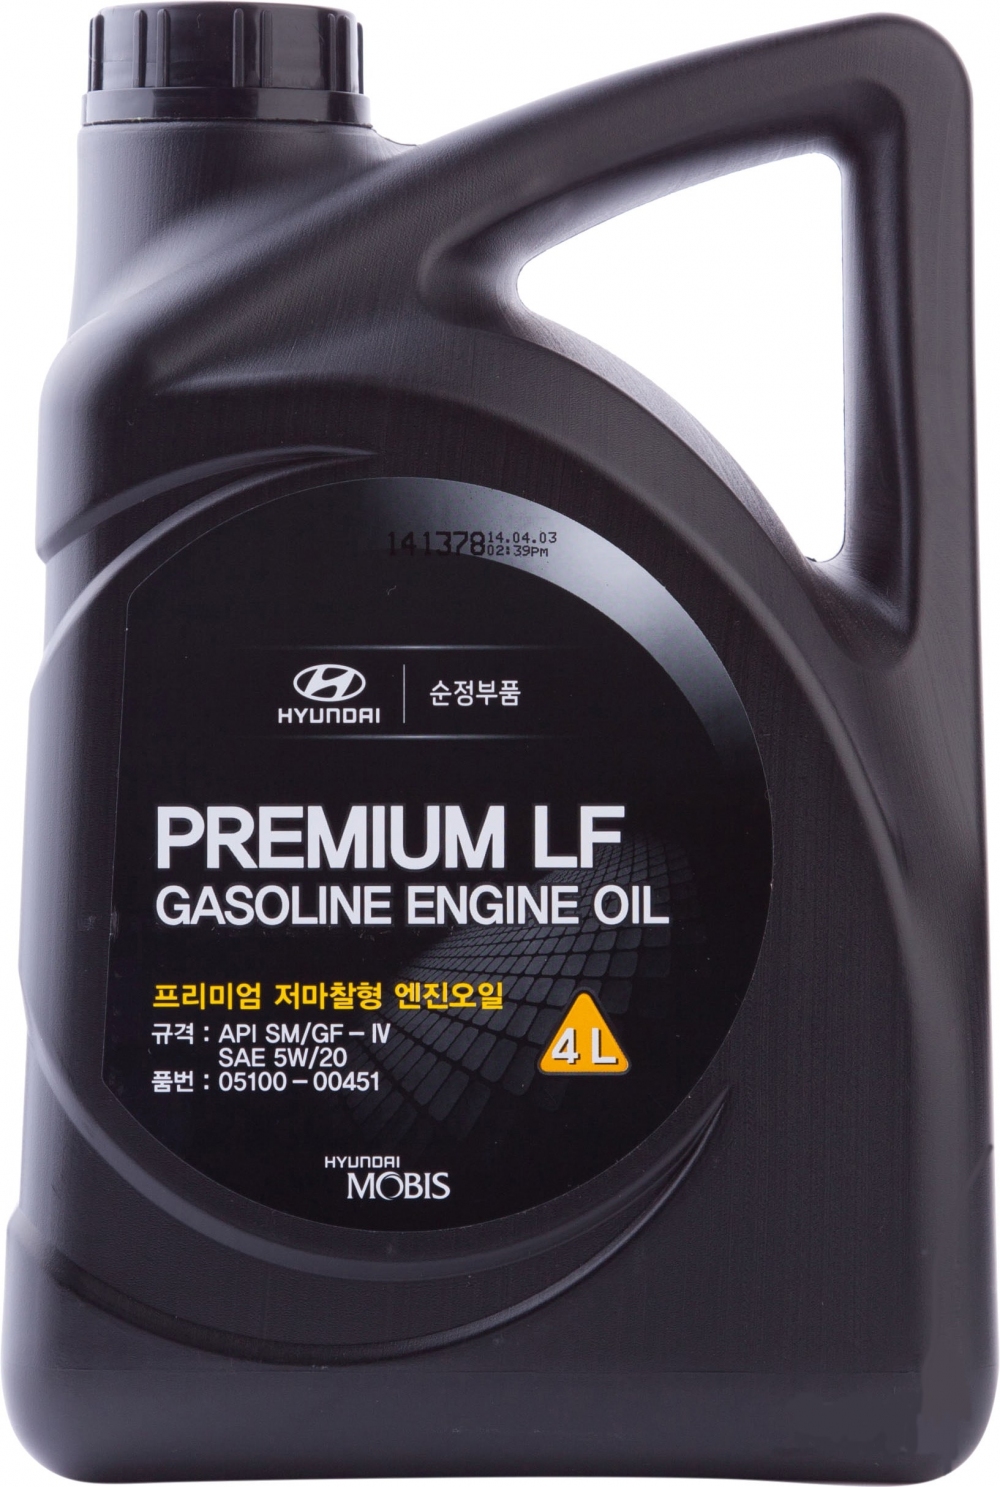 Hyundai-Kia (Mobis) Premium LF Gasoline 5W-20 (4л)